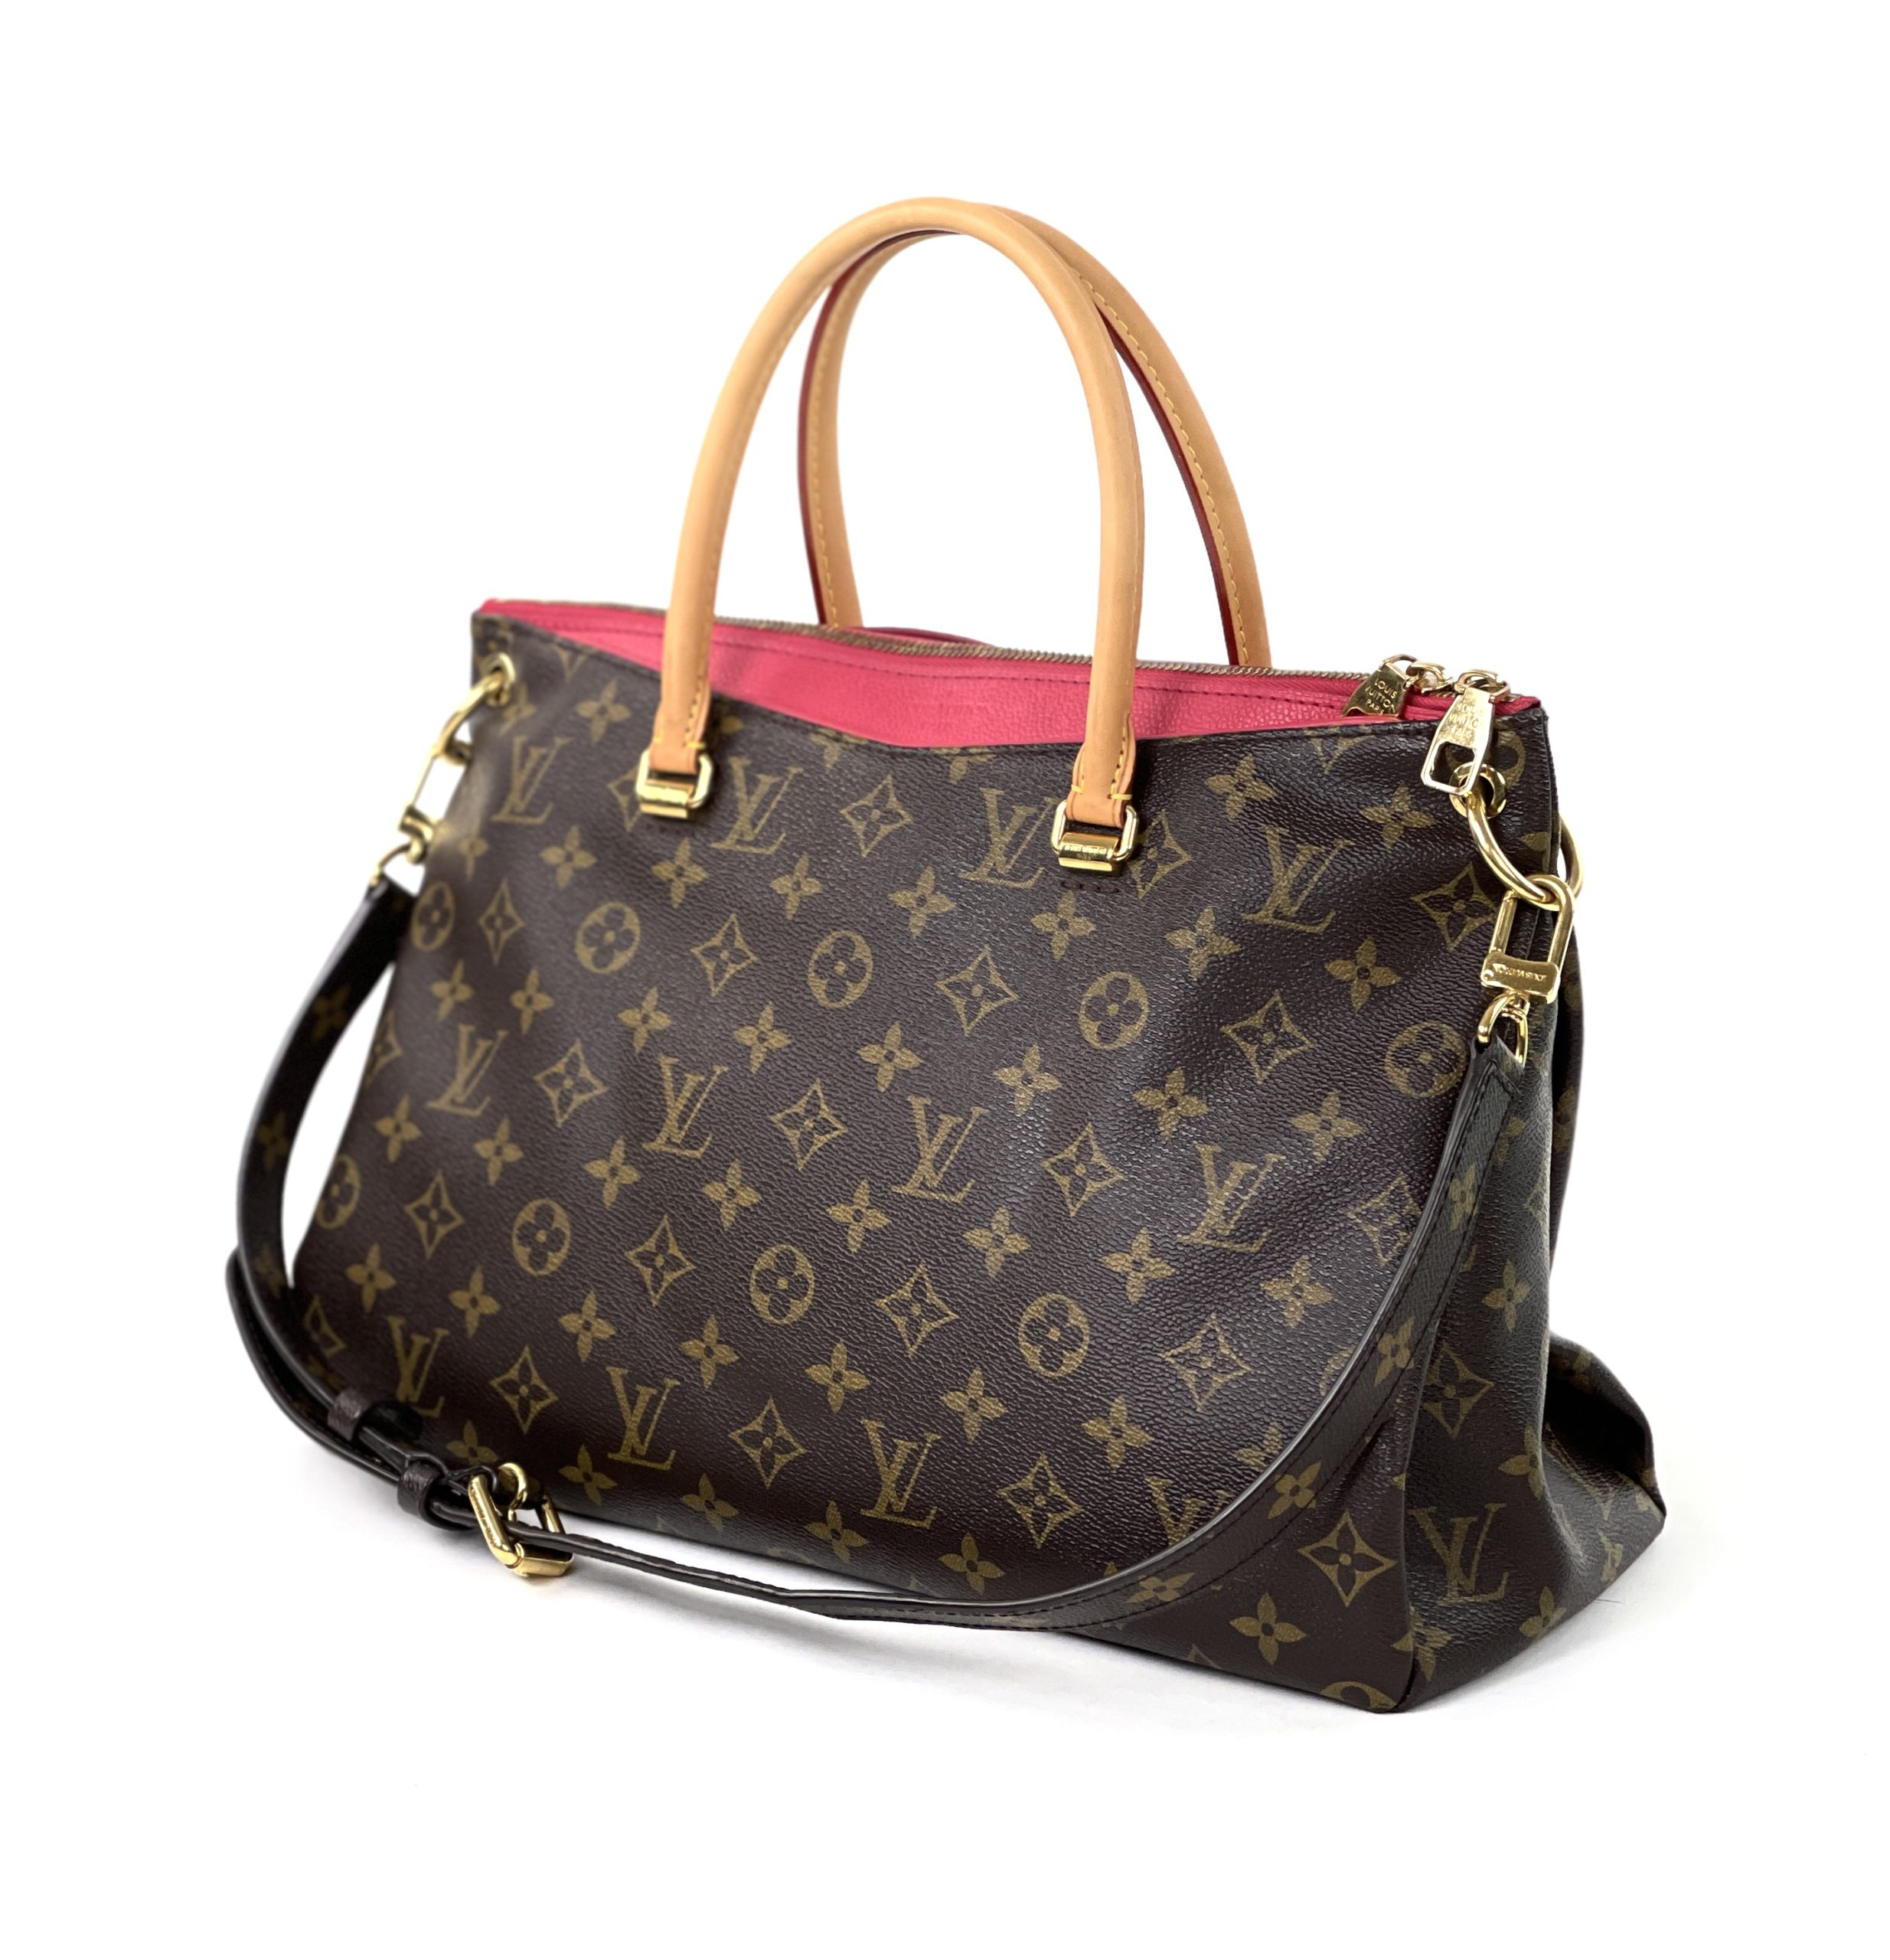 Say hello to Louis Vuitton's new Pallas monogram handbag